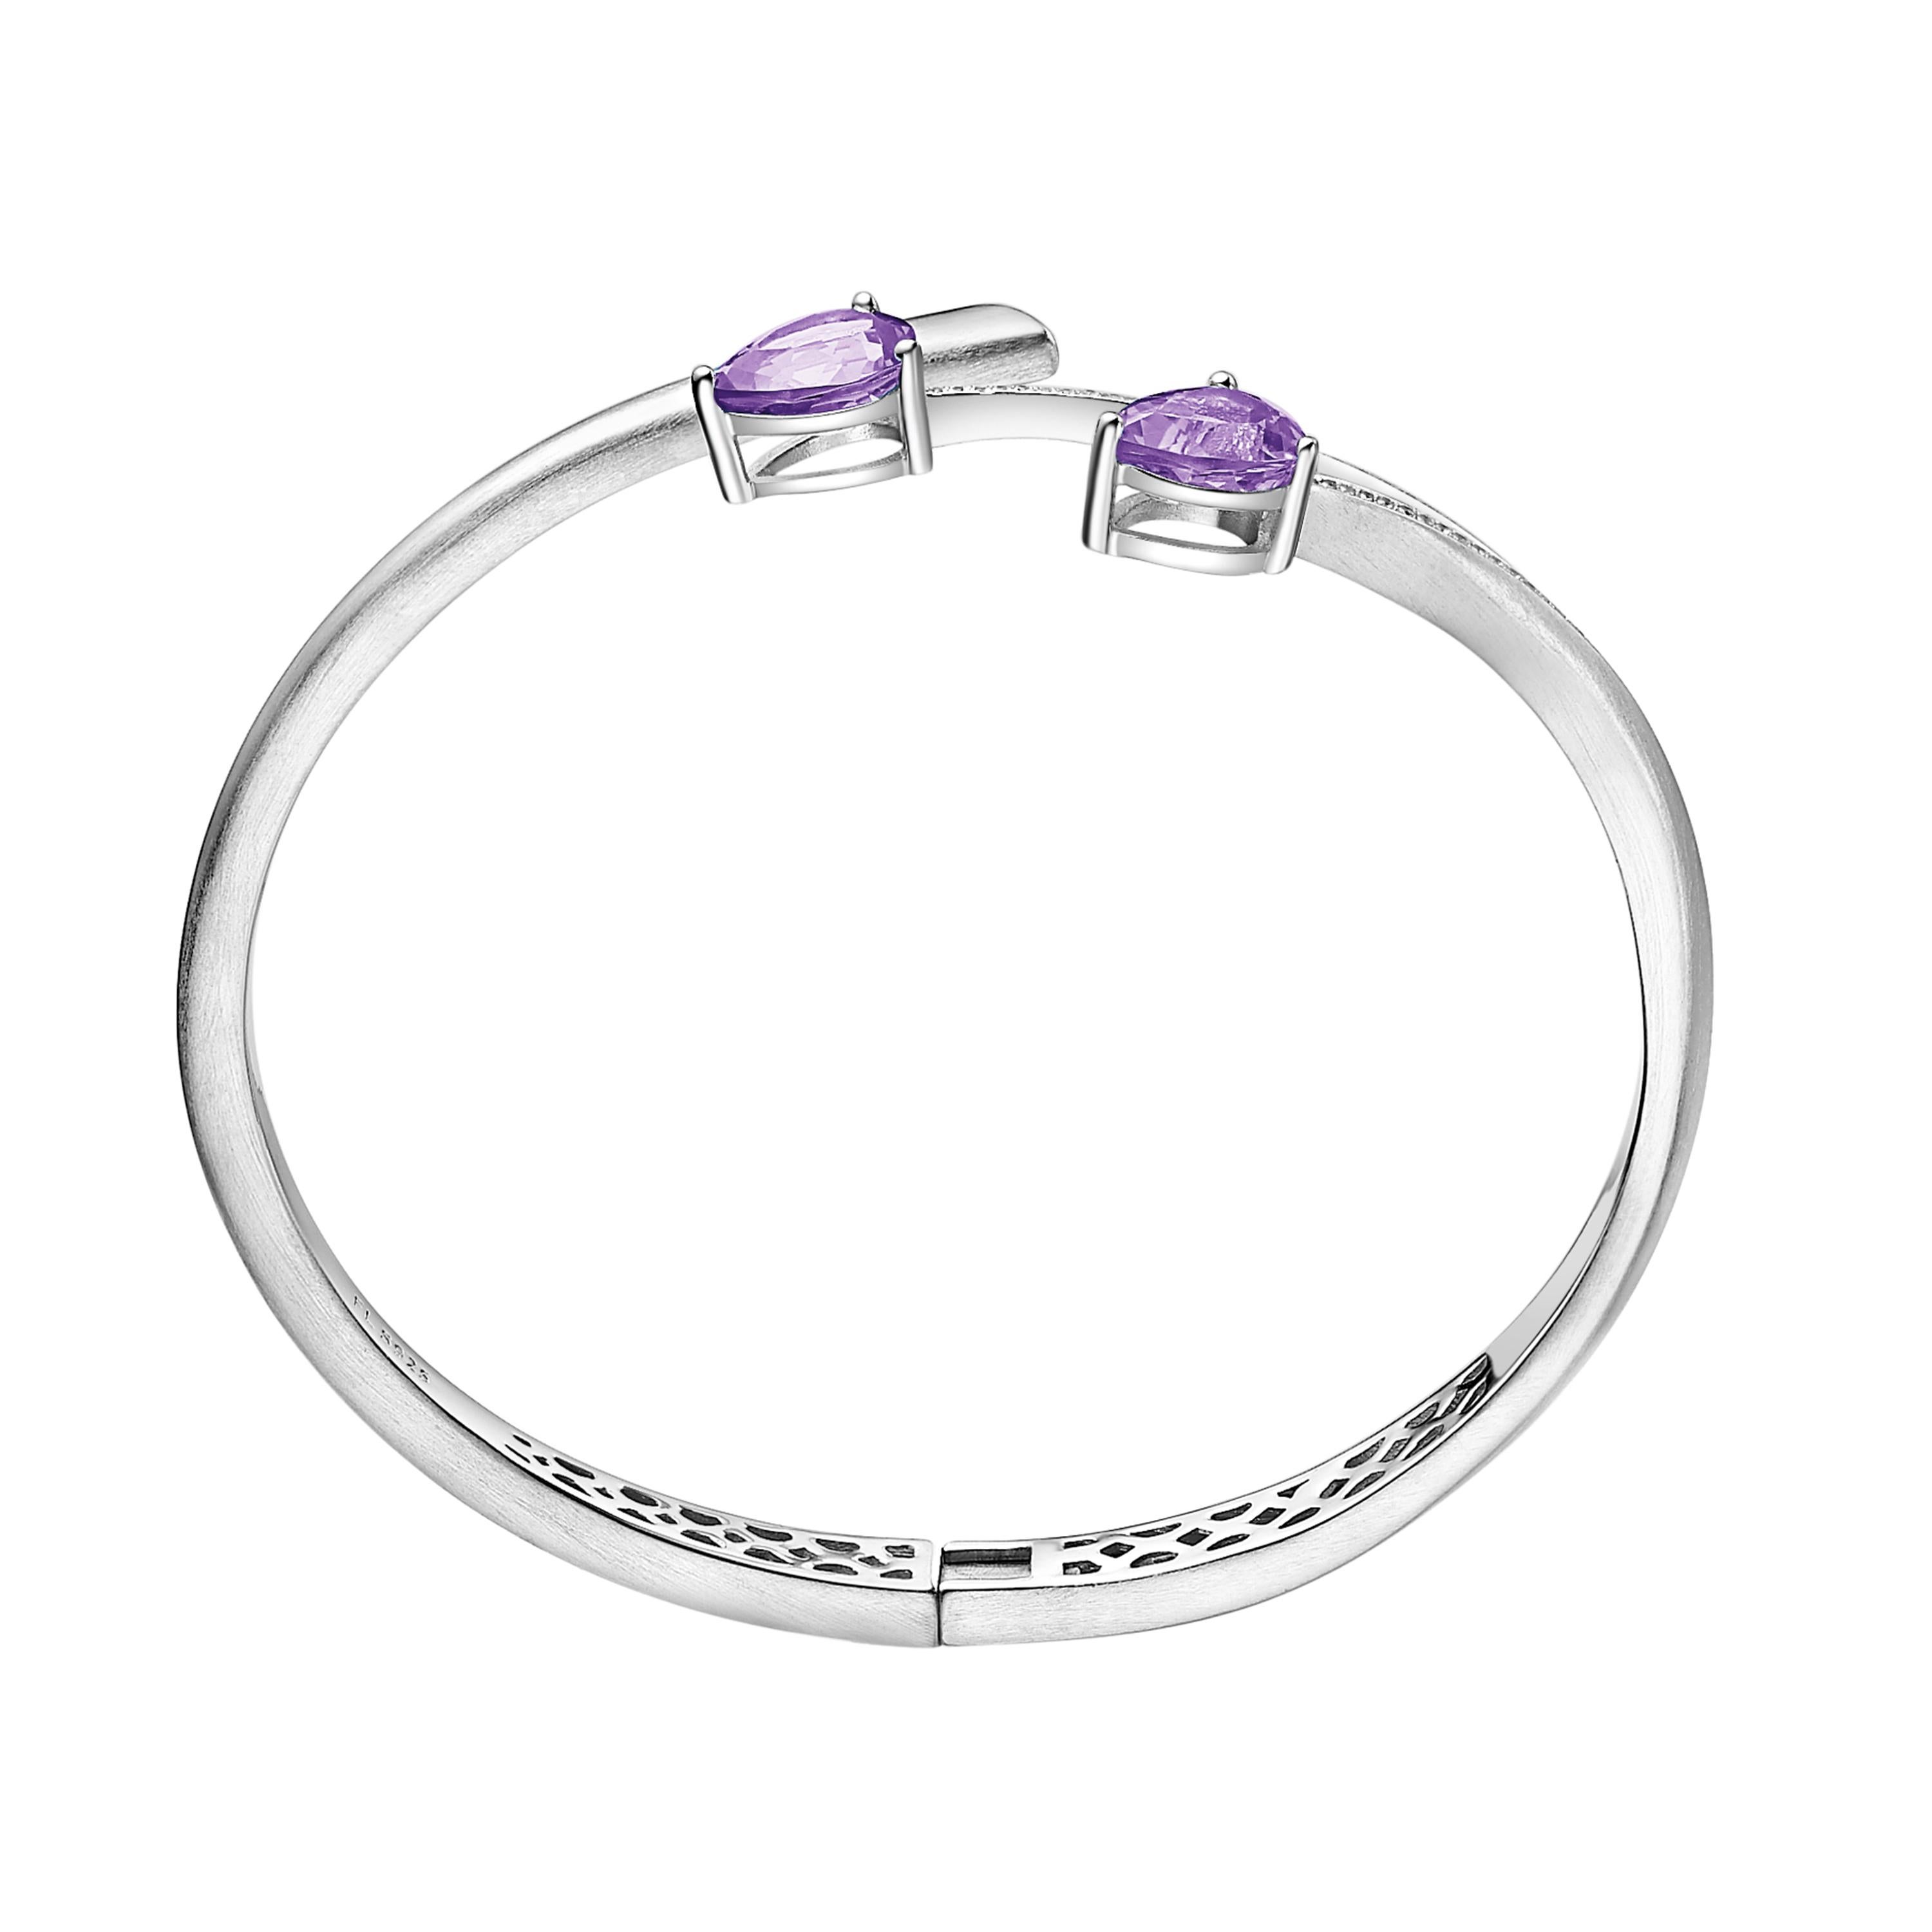 Contemporary Fei Liu Purple Amethyst Cubic Zirconia Sterling Silver Bangle Bracelet